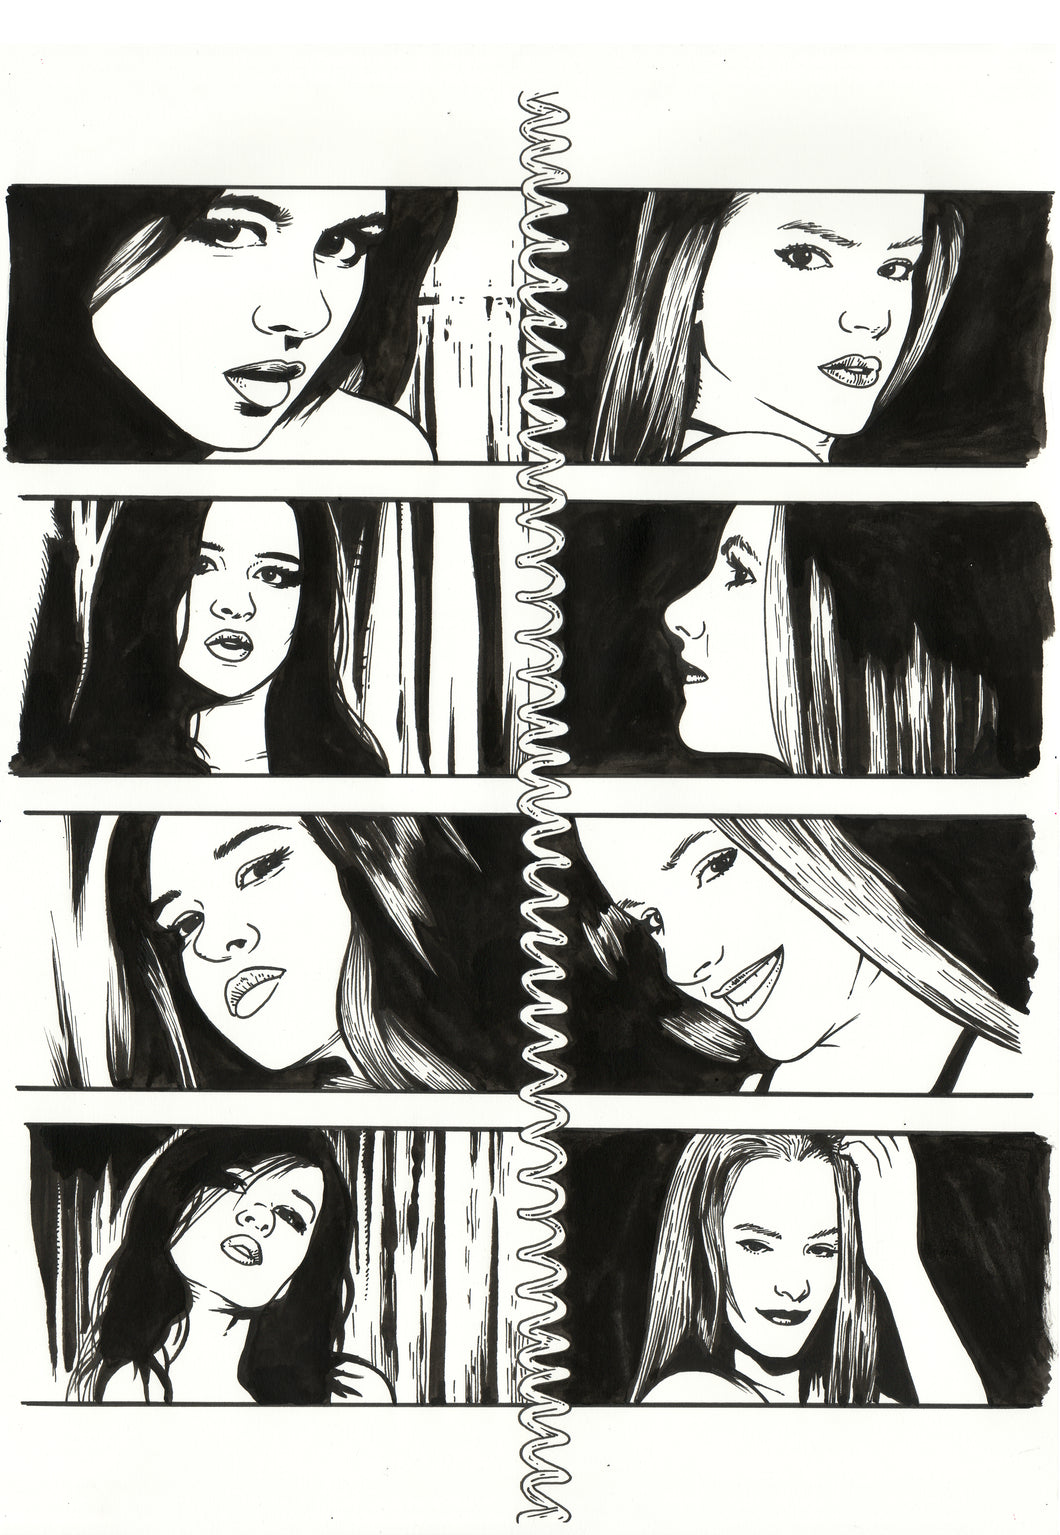 Vampocalypse #2 - Story Page 06 - Original Art